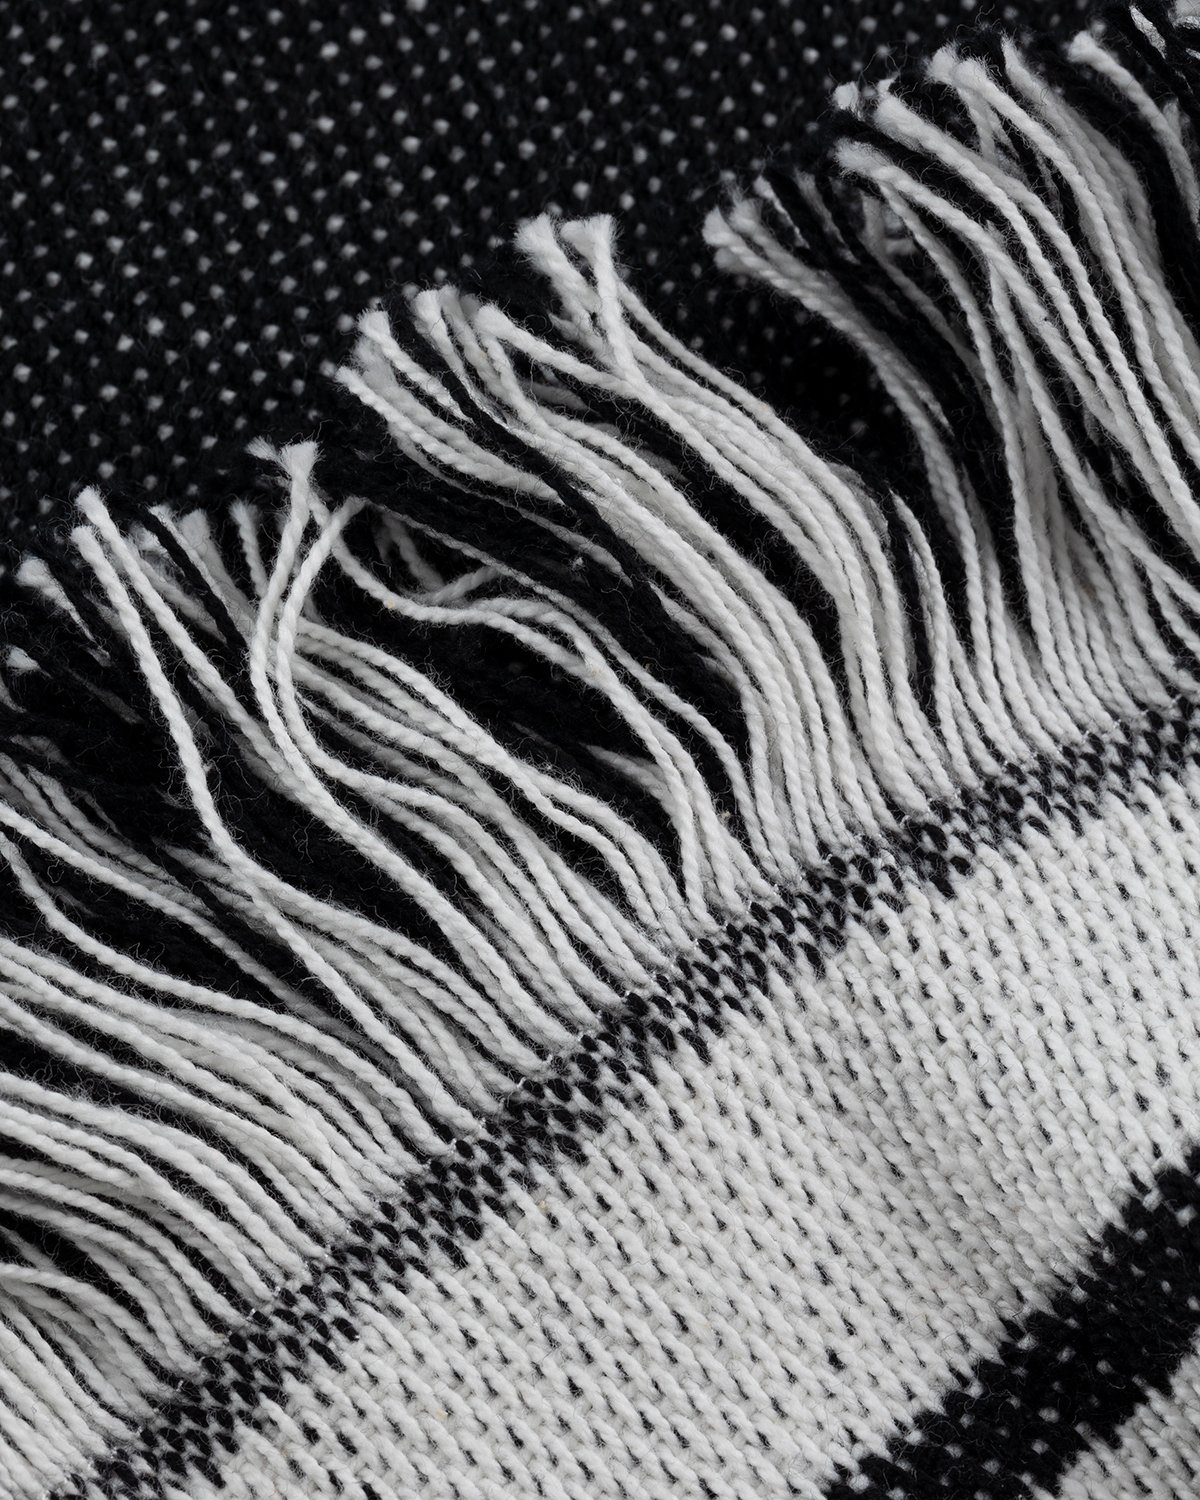 Carhartt WIP - Whisper Woven Blanket Wax Black - Lifestyle - White - Image 4